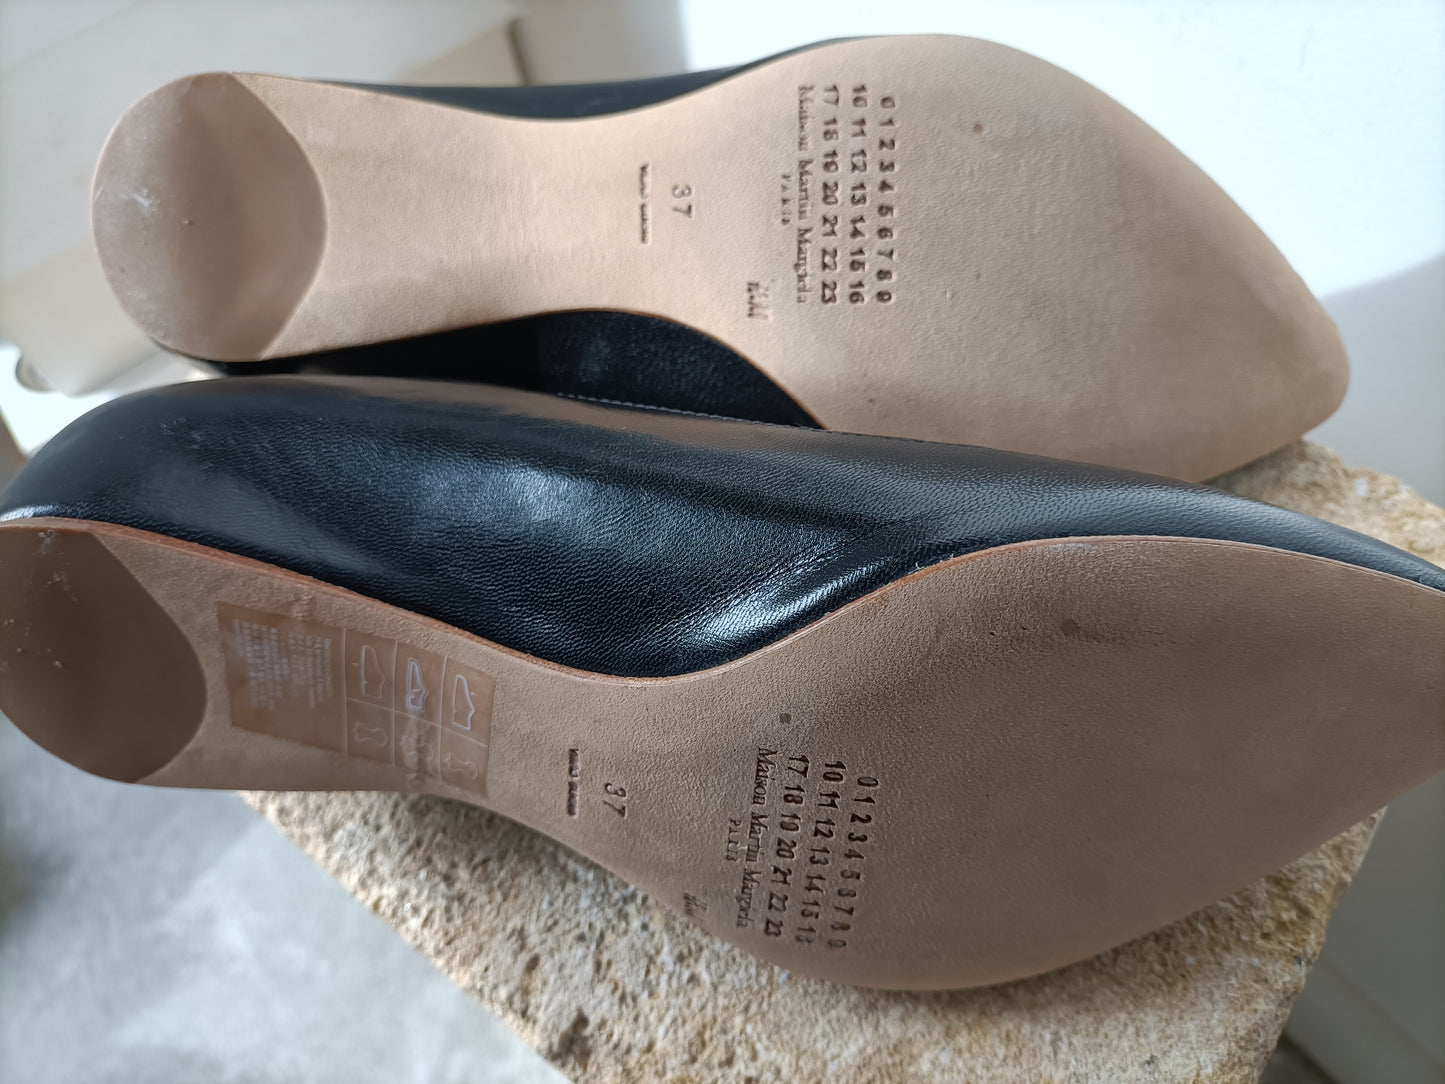 Maison Margiela x H&M - Black Leather Shaped Ballet Flats - Size 37